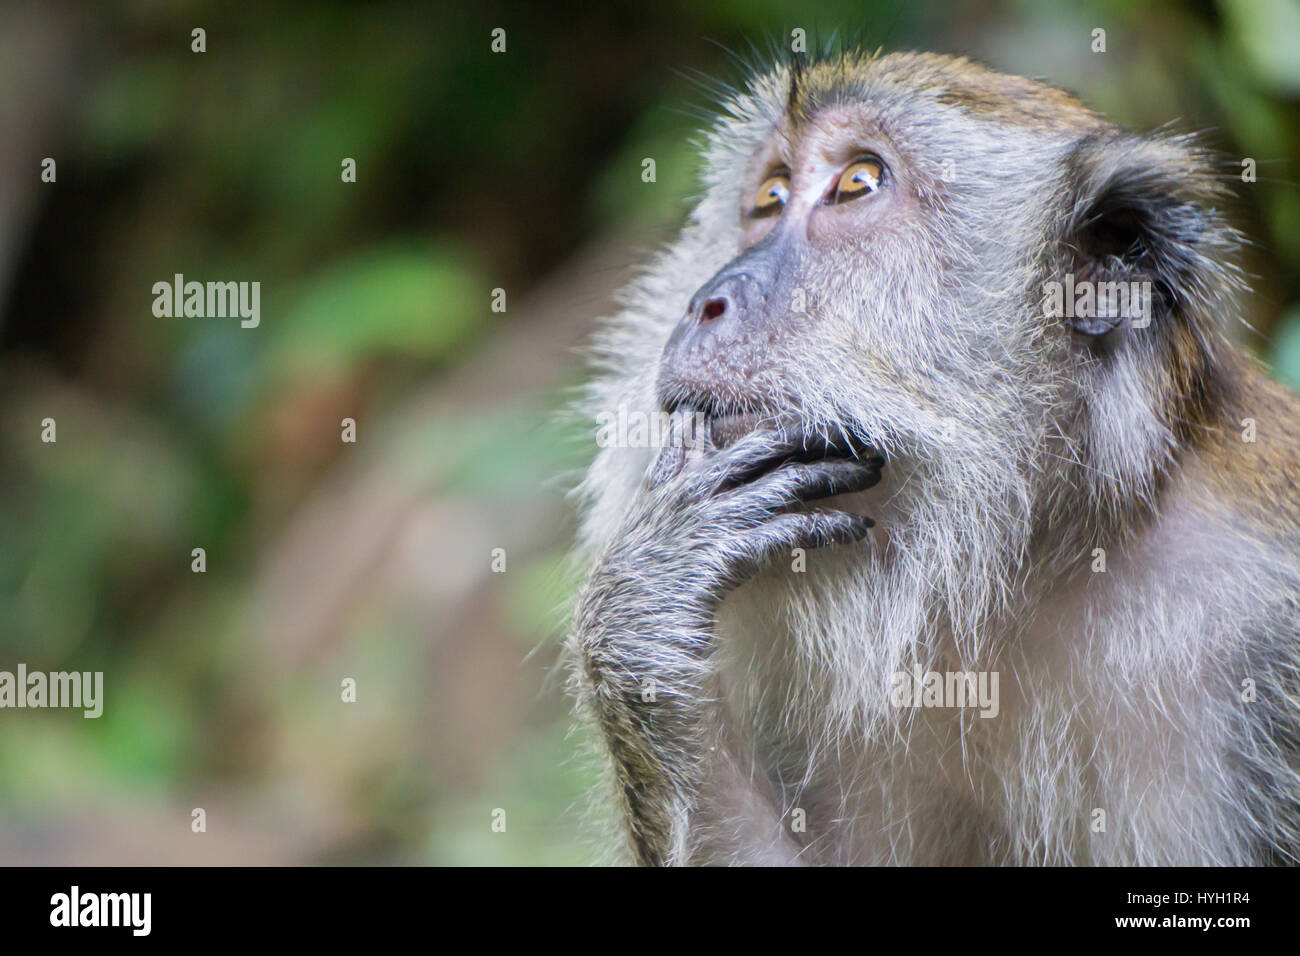 A thinking monkey, Langkawi Malaysia. Stock Photo